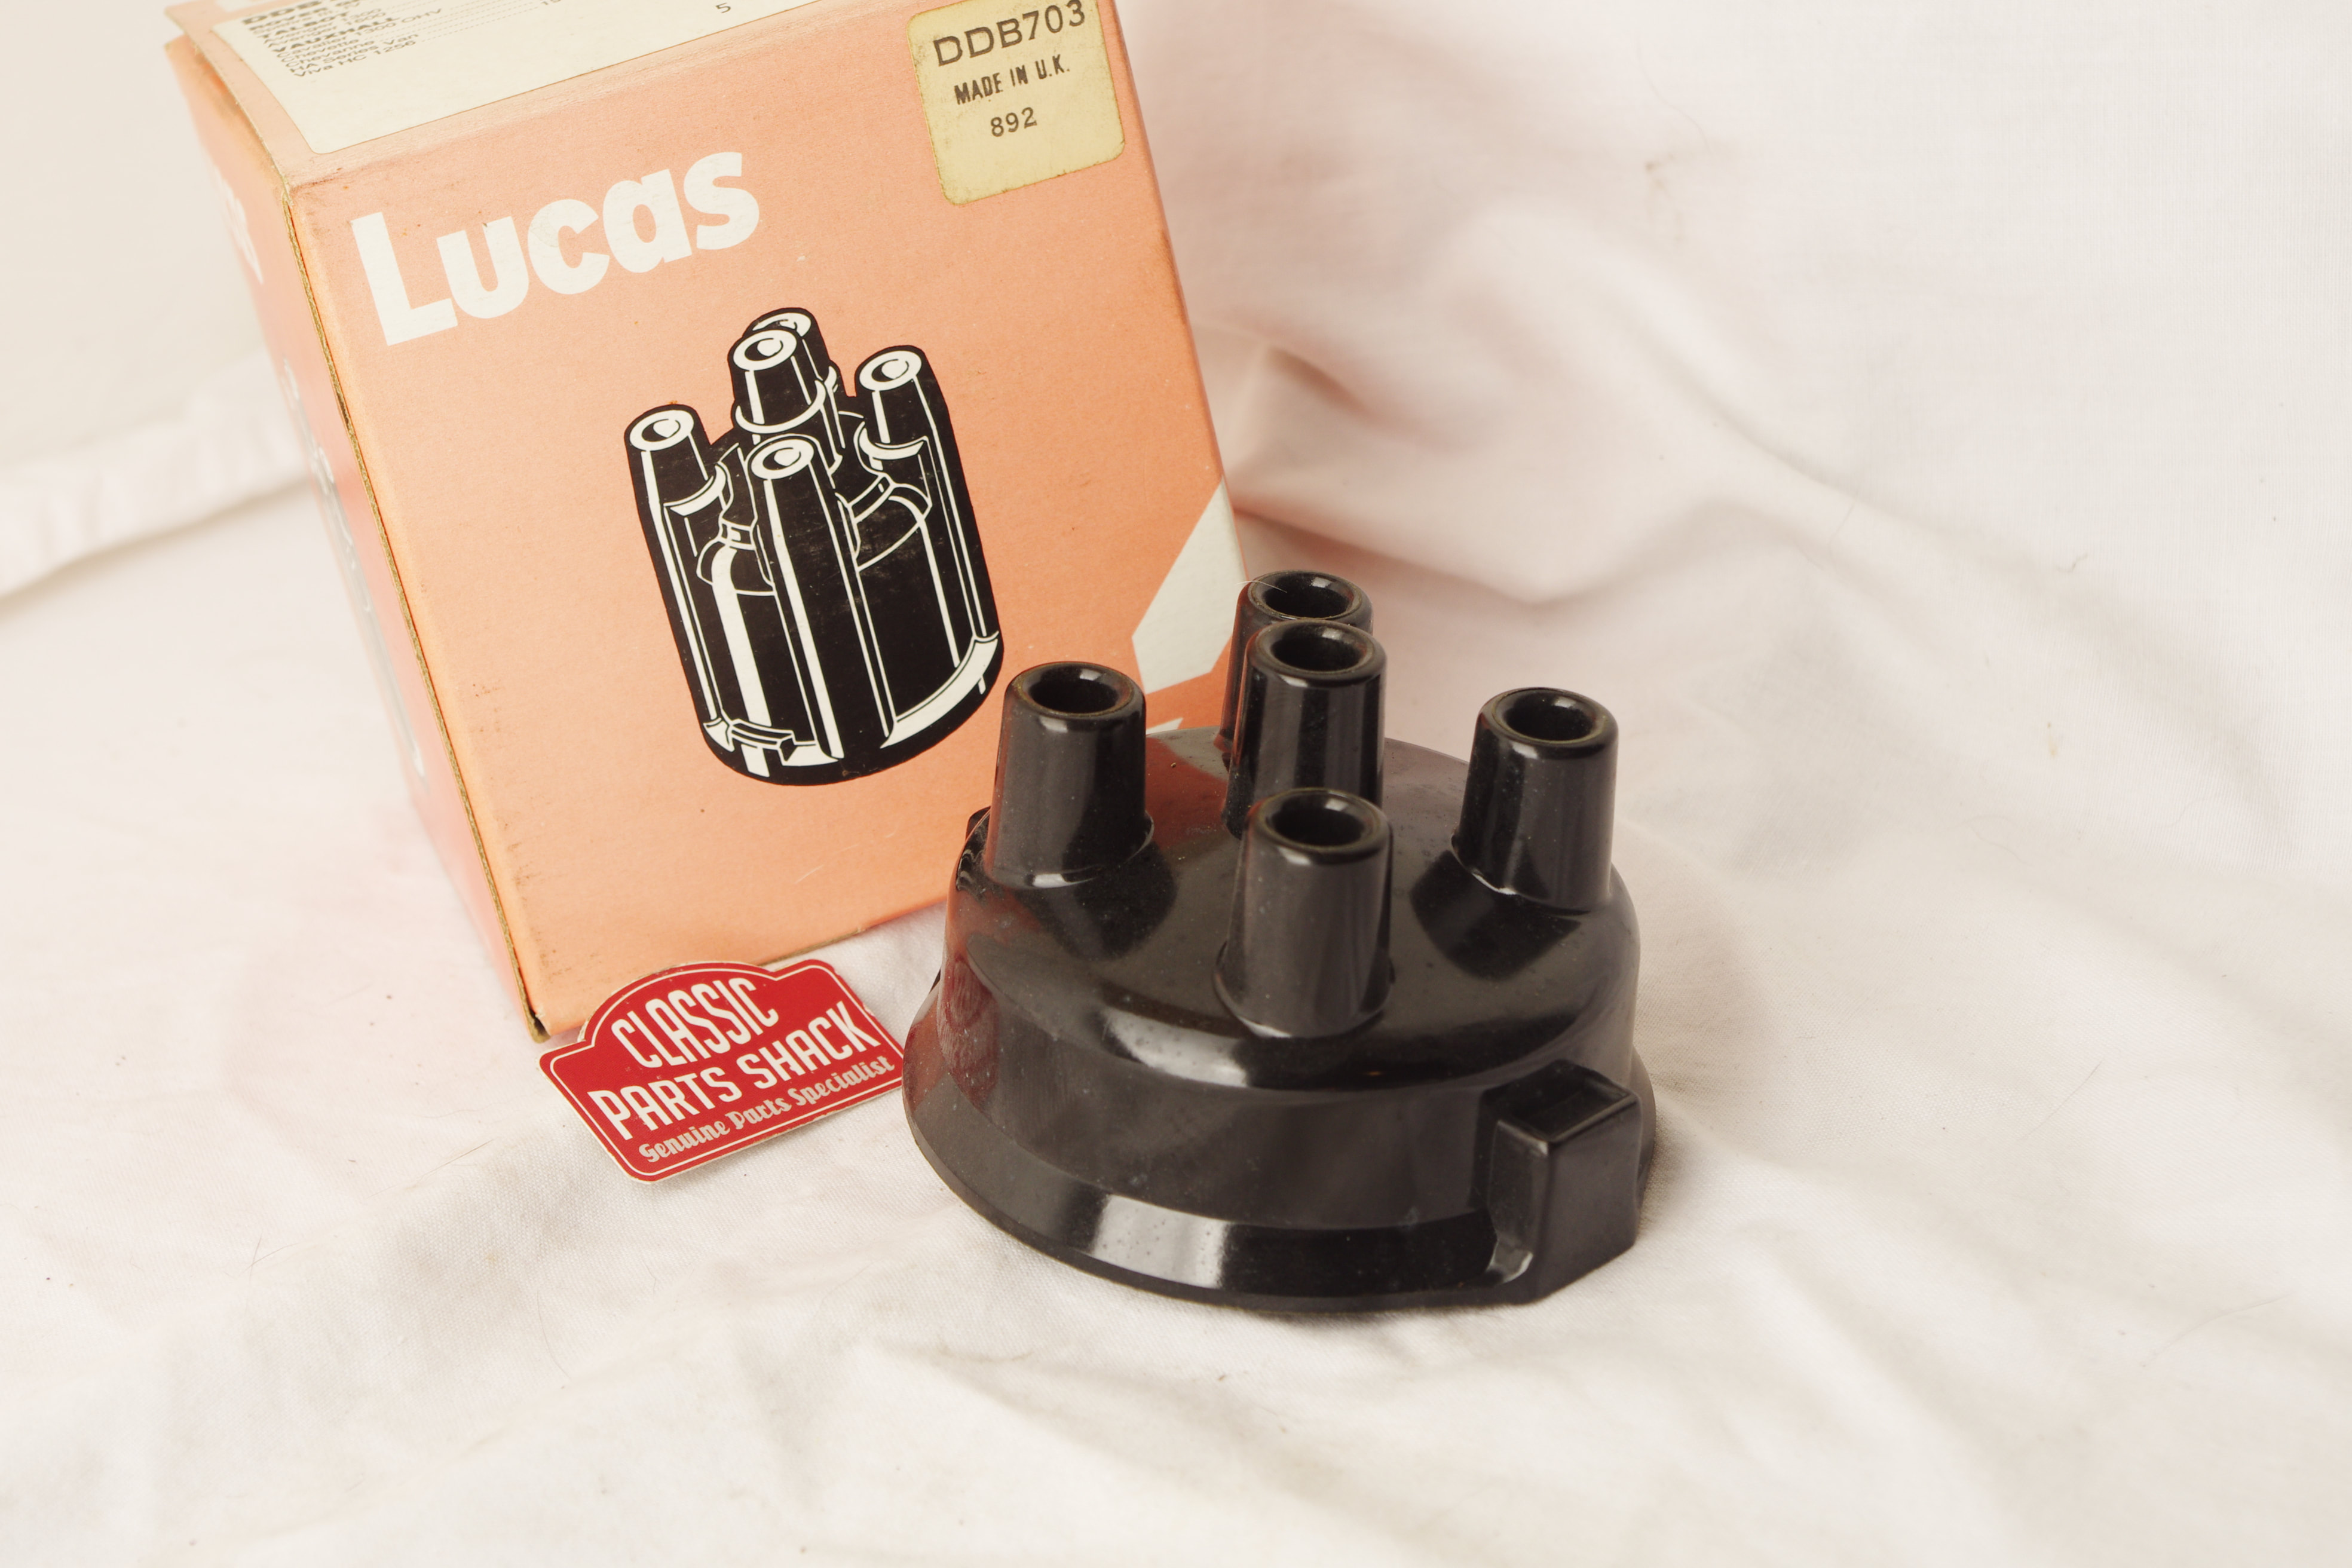 Genuine LUCAS Ignition Distributor Cap DDB703 Quality Assured 